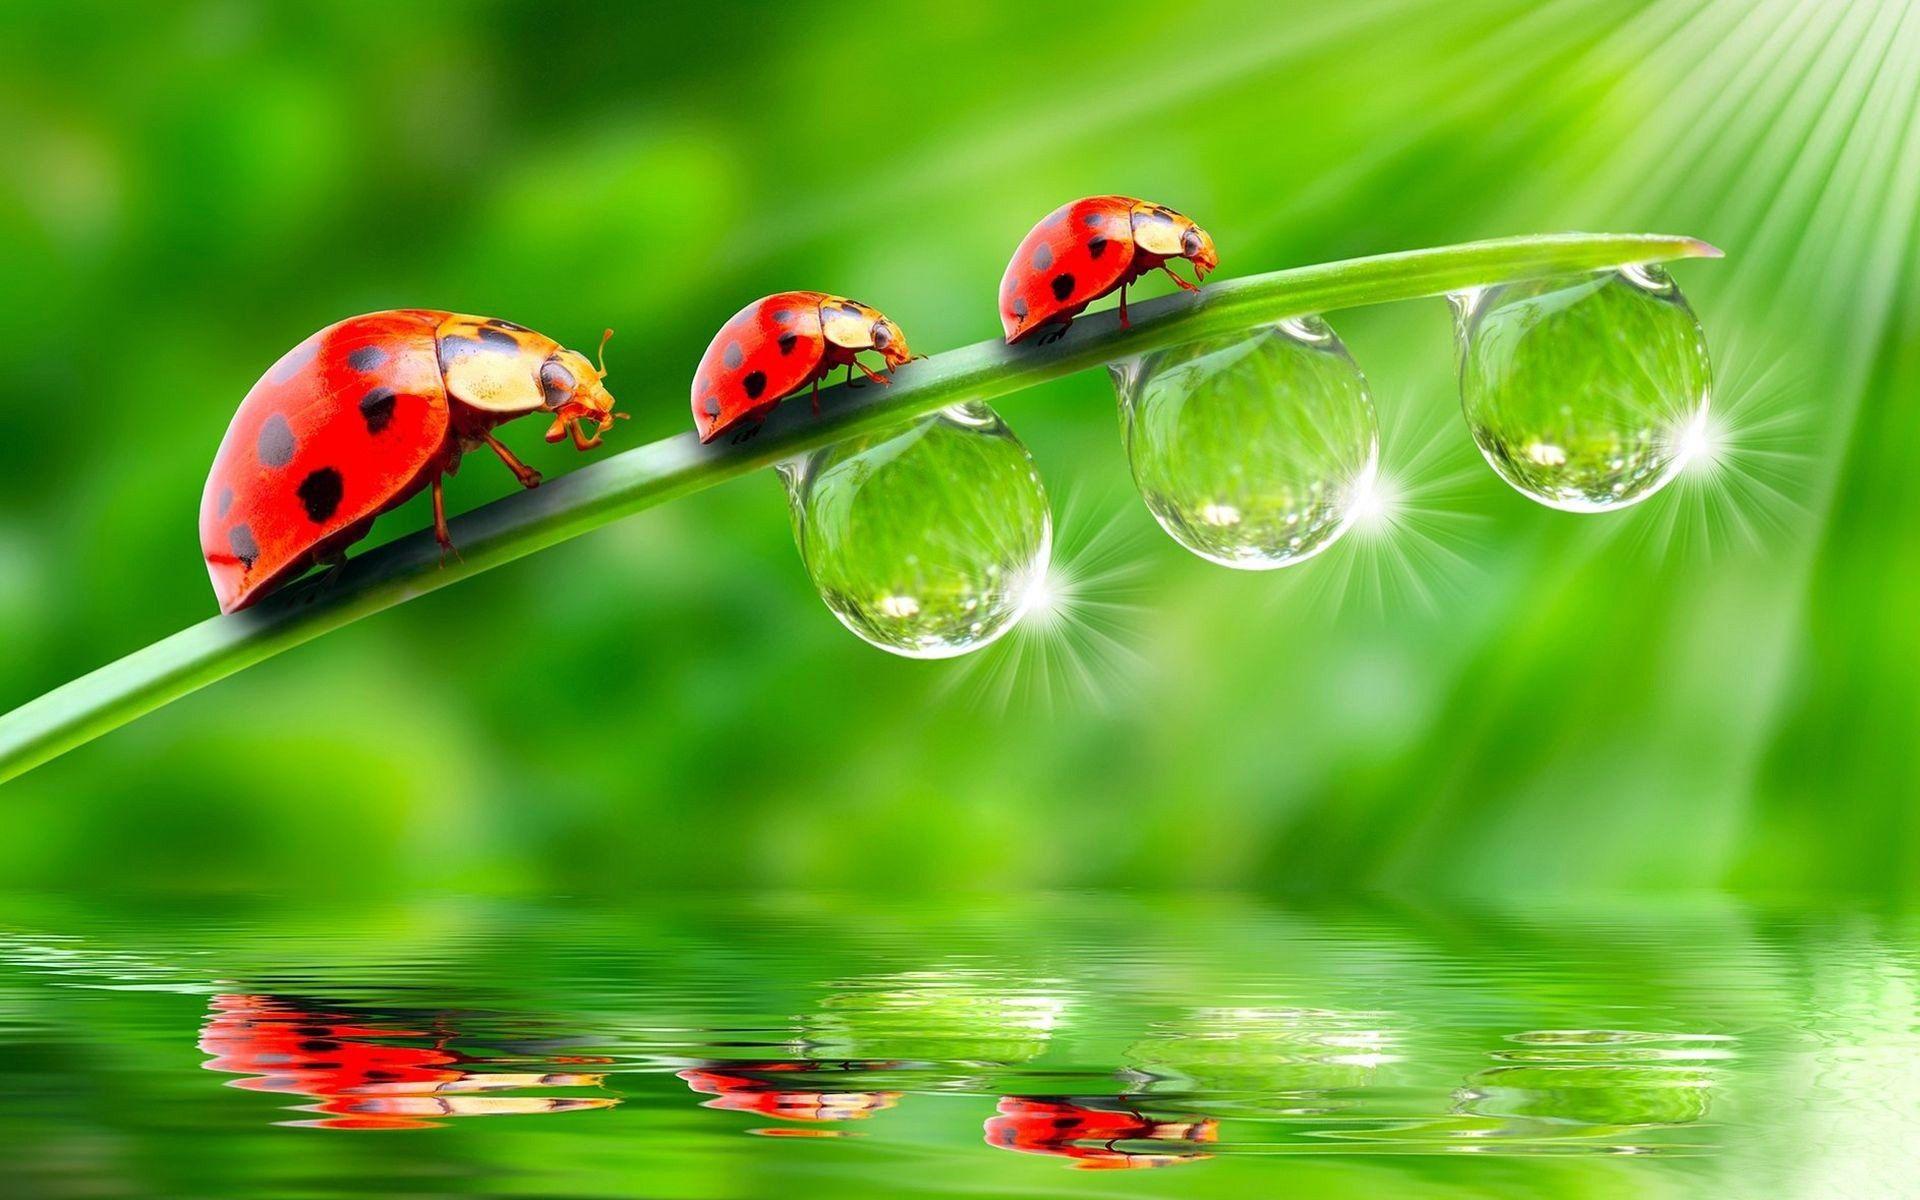 Wallpaper.wiki Ladybird Leaf Water Drop Background PIC WPD0011901